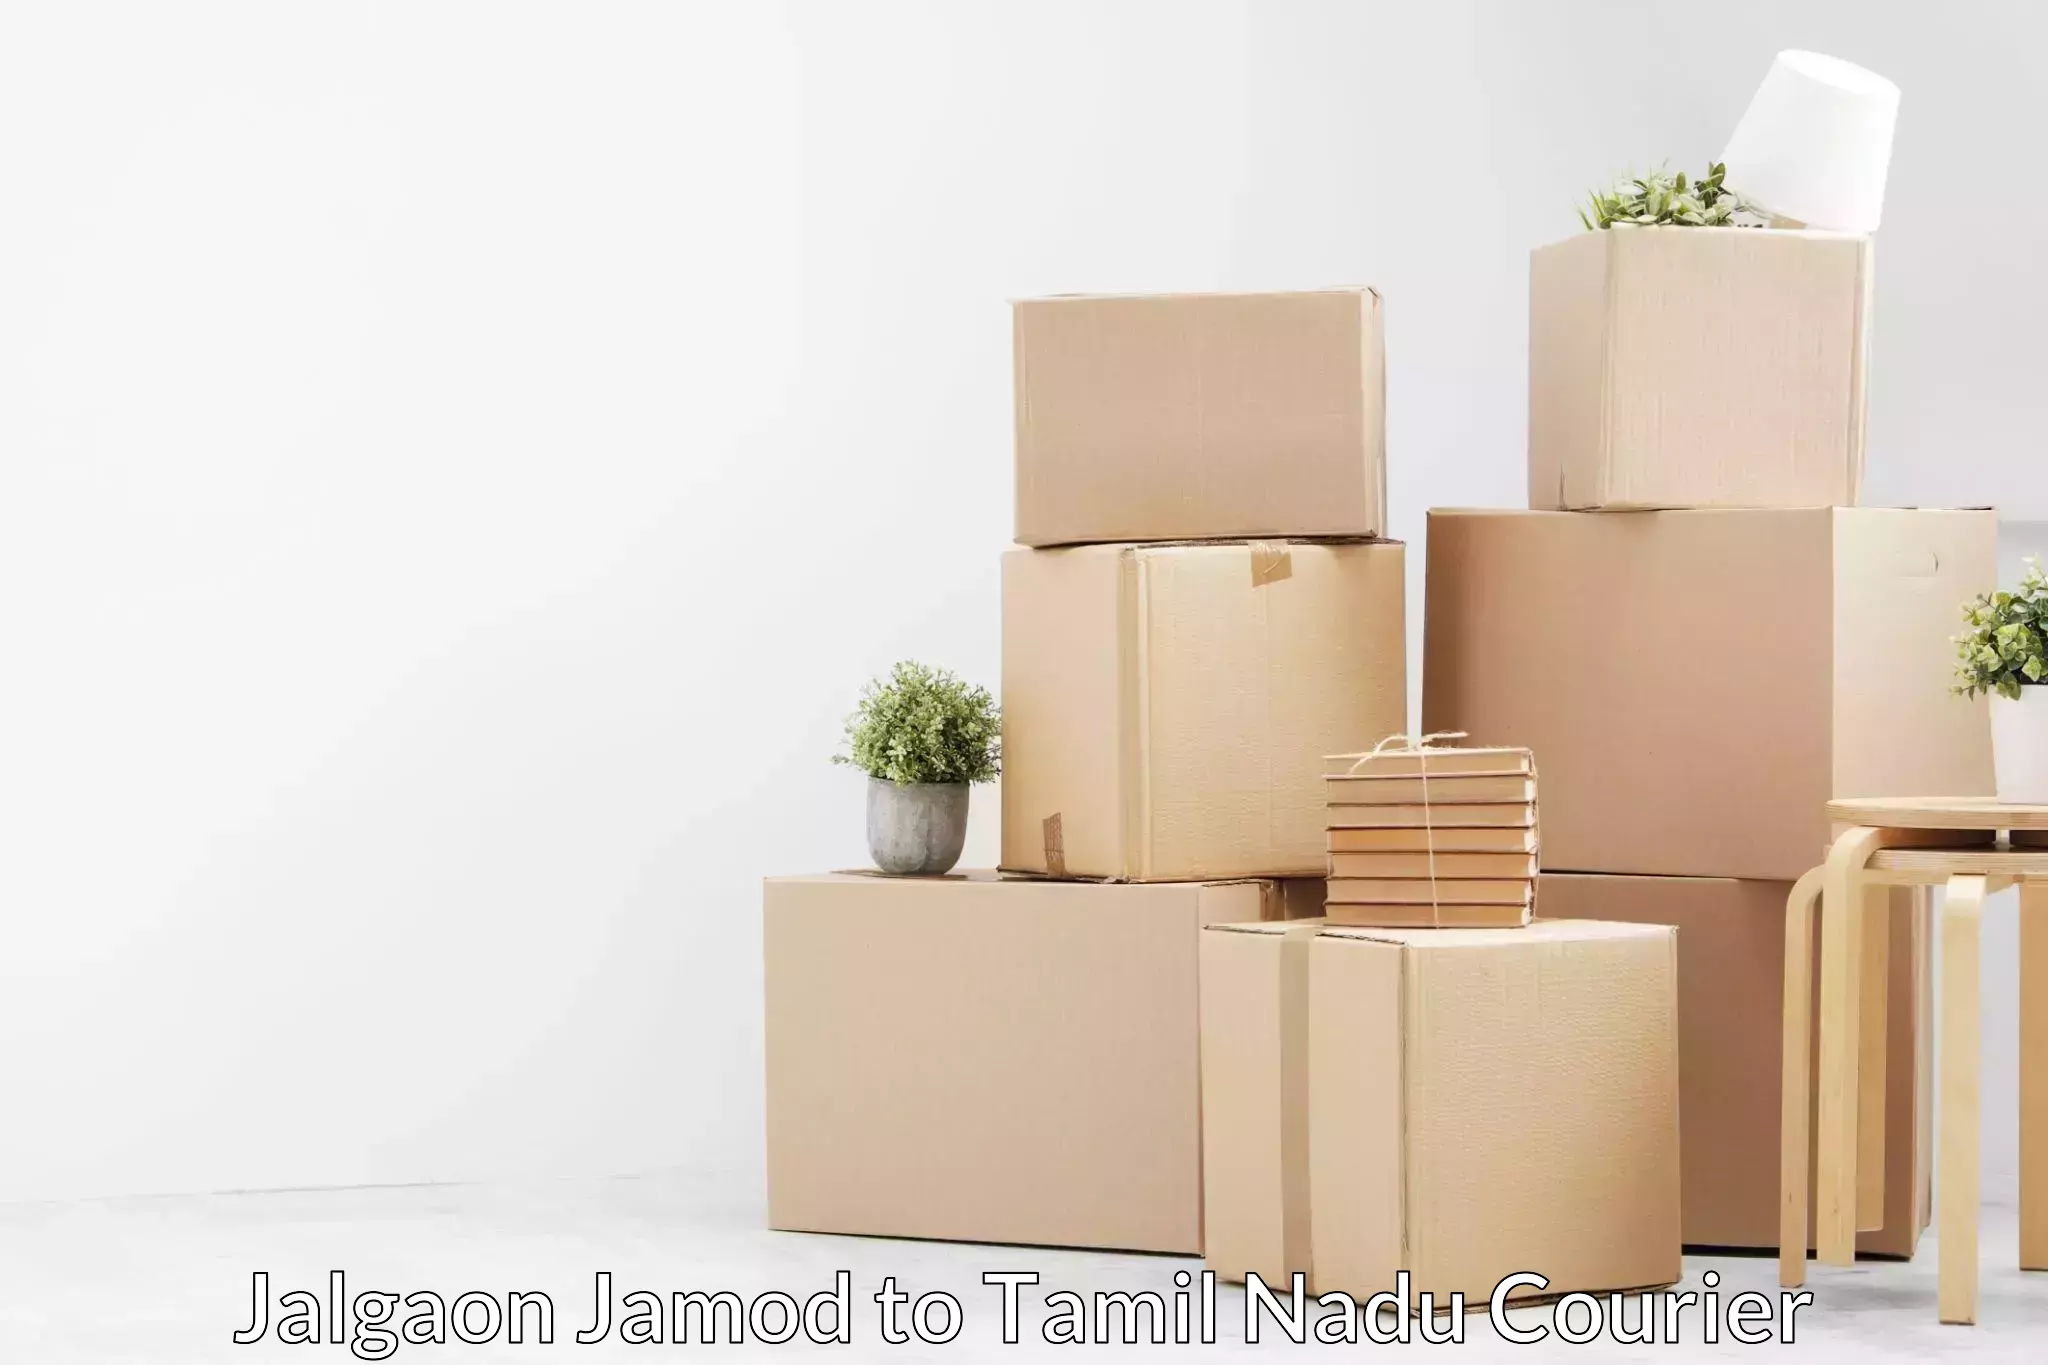 Furniture moving experts Jalgaon Jamod to Tamil Nadu